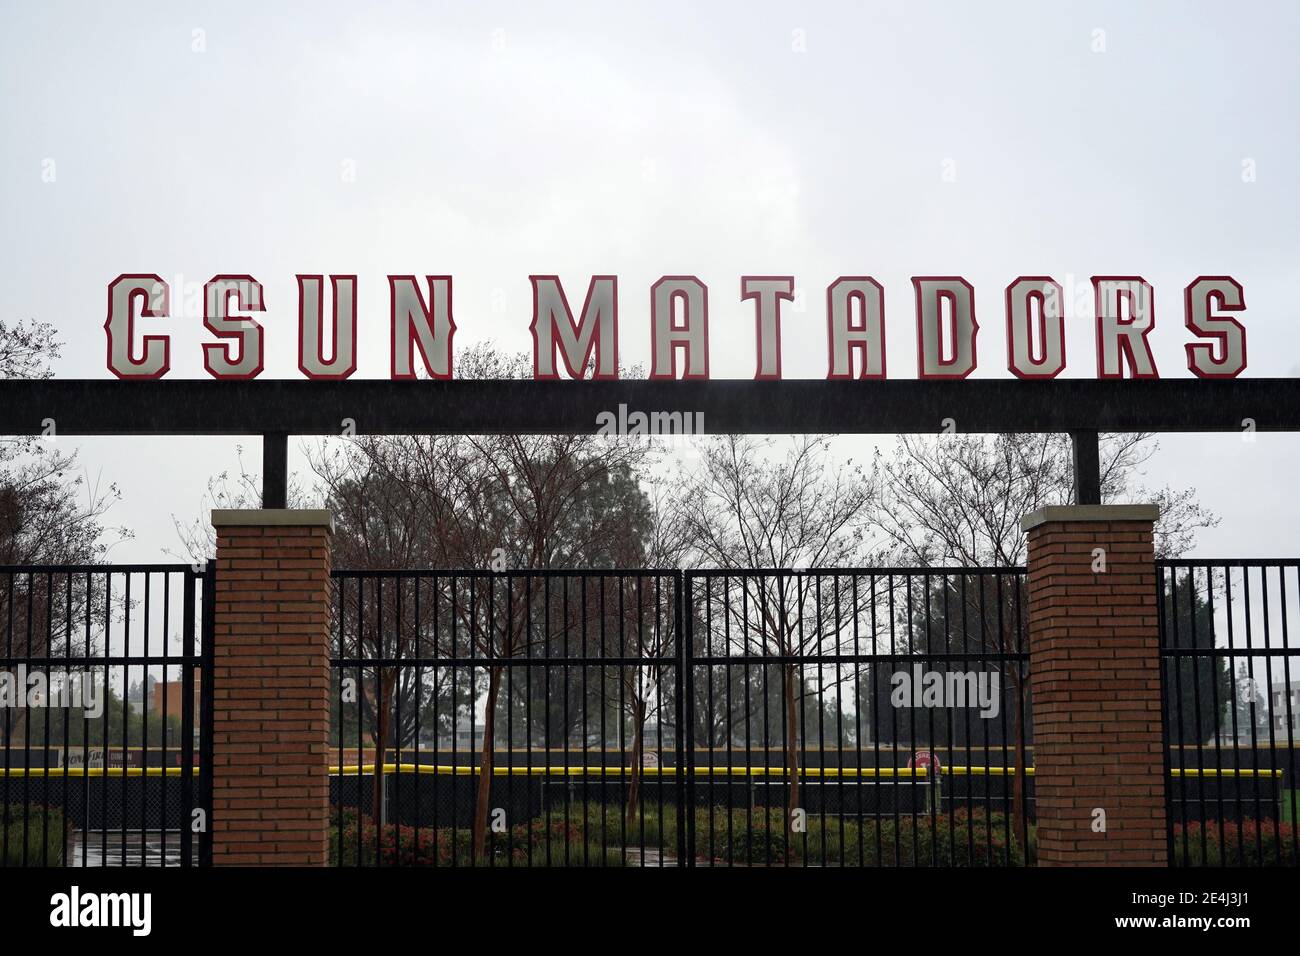 Ein CSUN Matadors Schild am Eingang zum Matador Baseballfeld auf dem Cal State Northridge Campus, Samstag, 23. Januar 2021, in Northridge, Kalifornien. Stockfoto